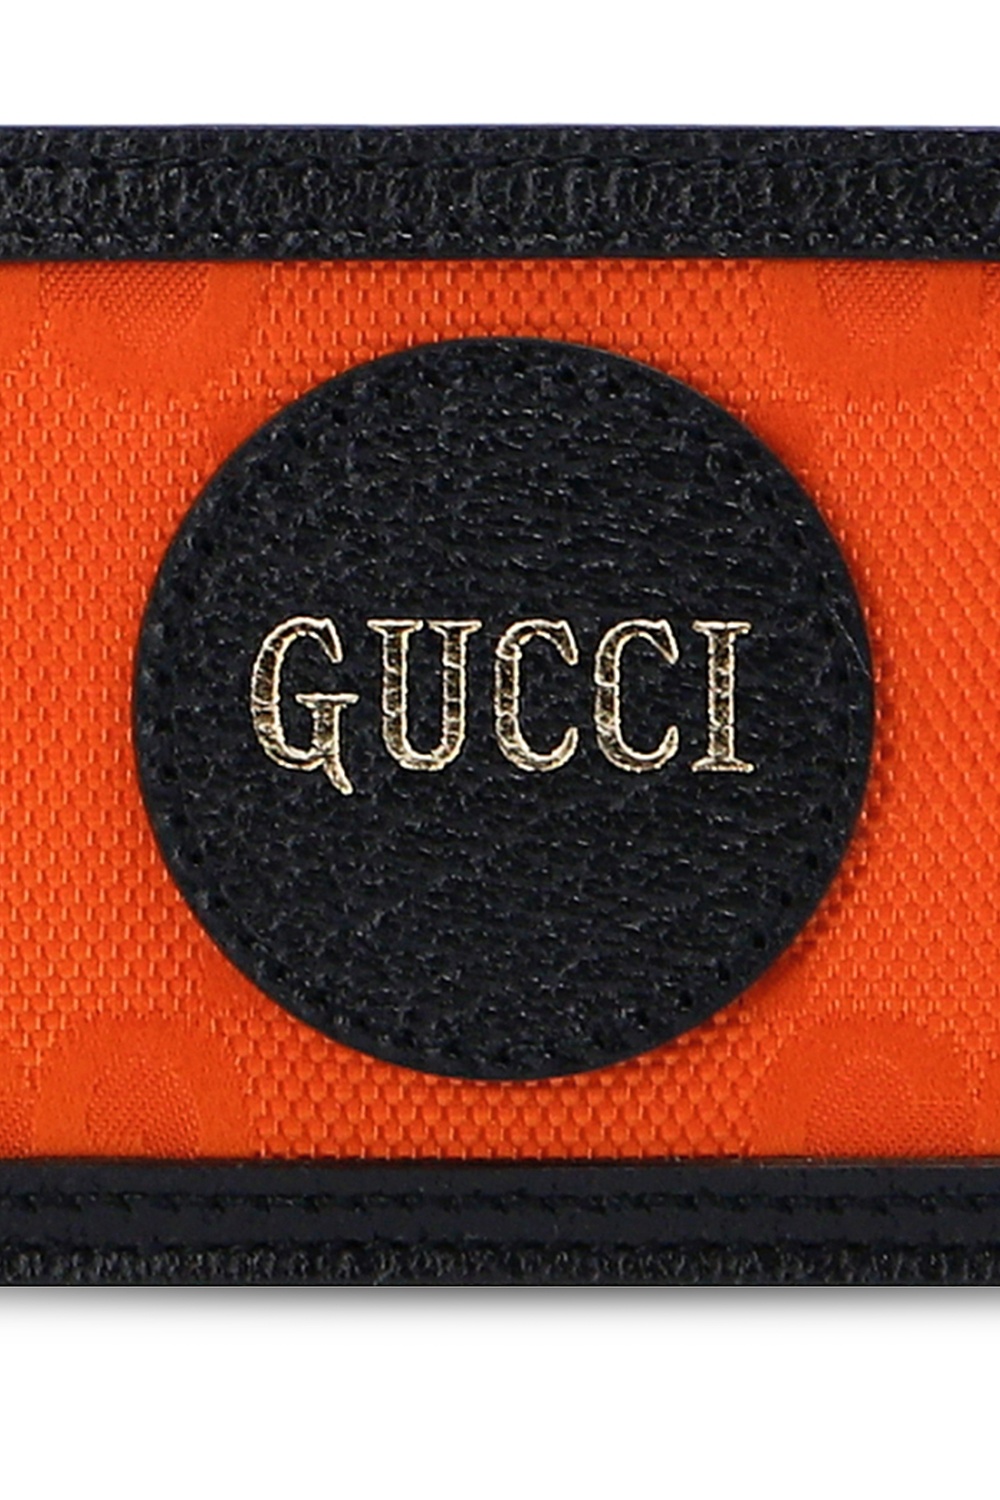 Gucci Card holder